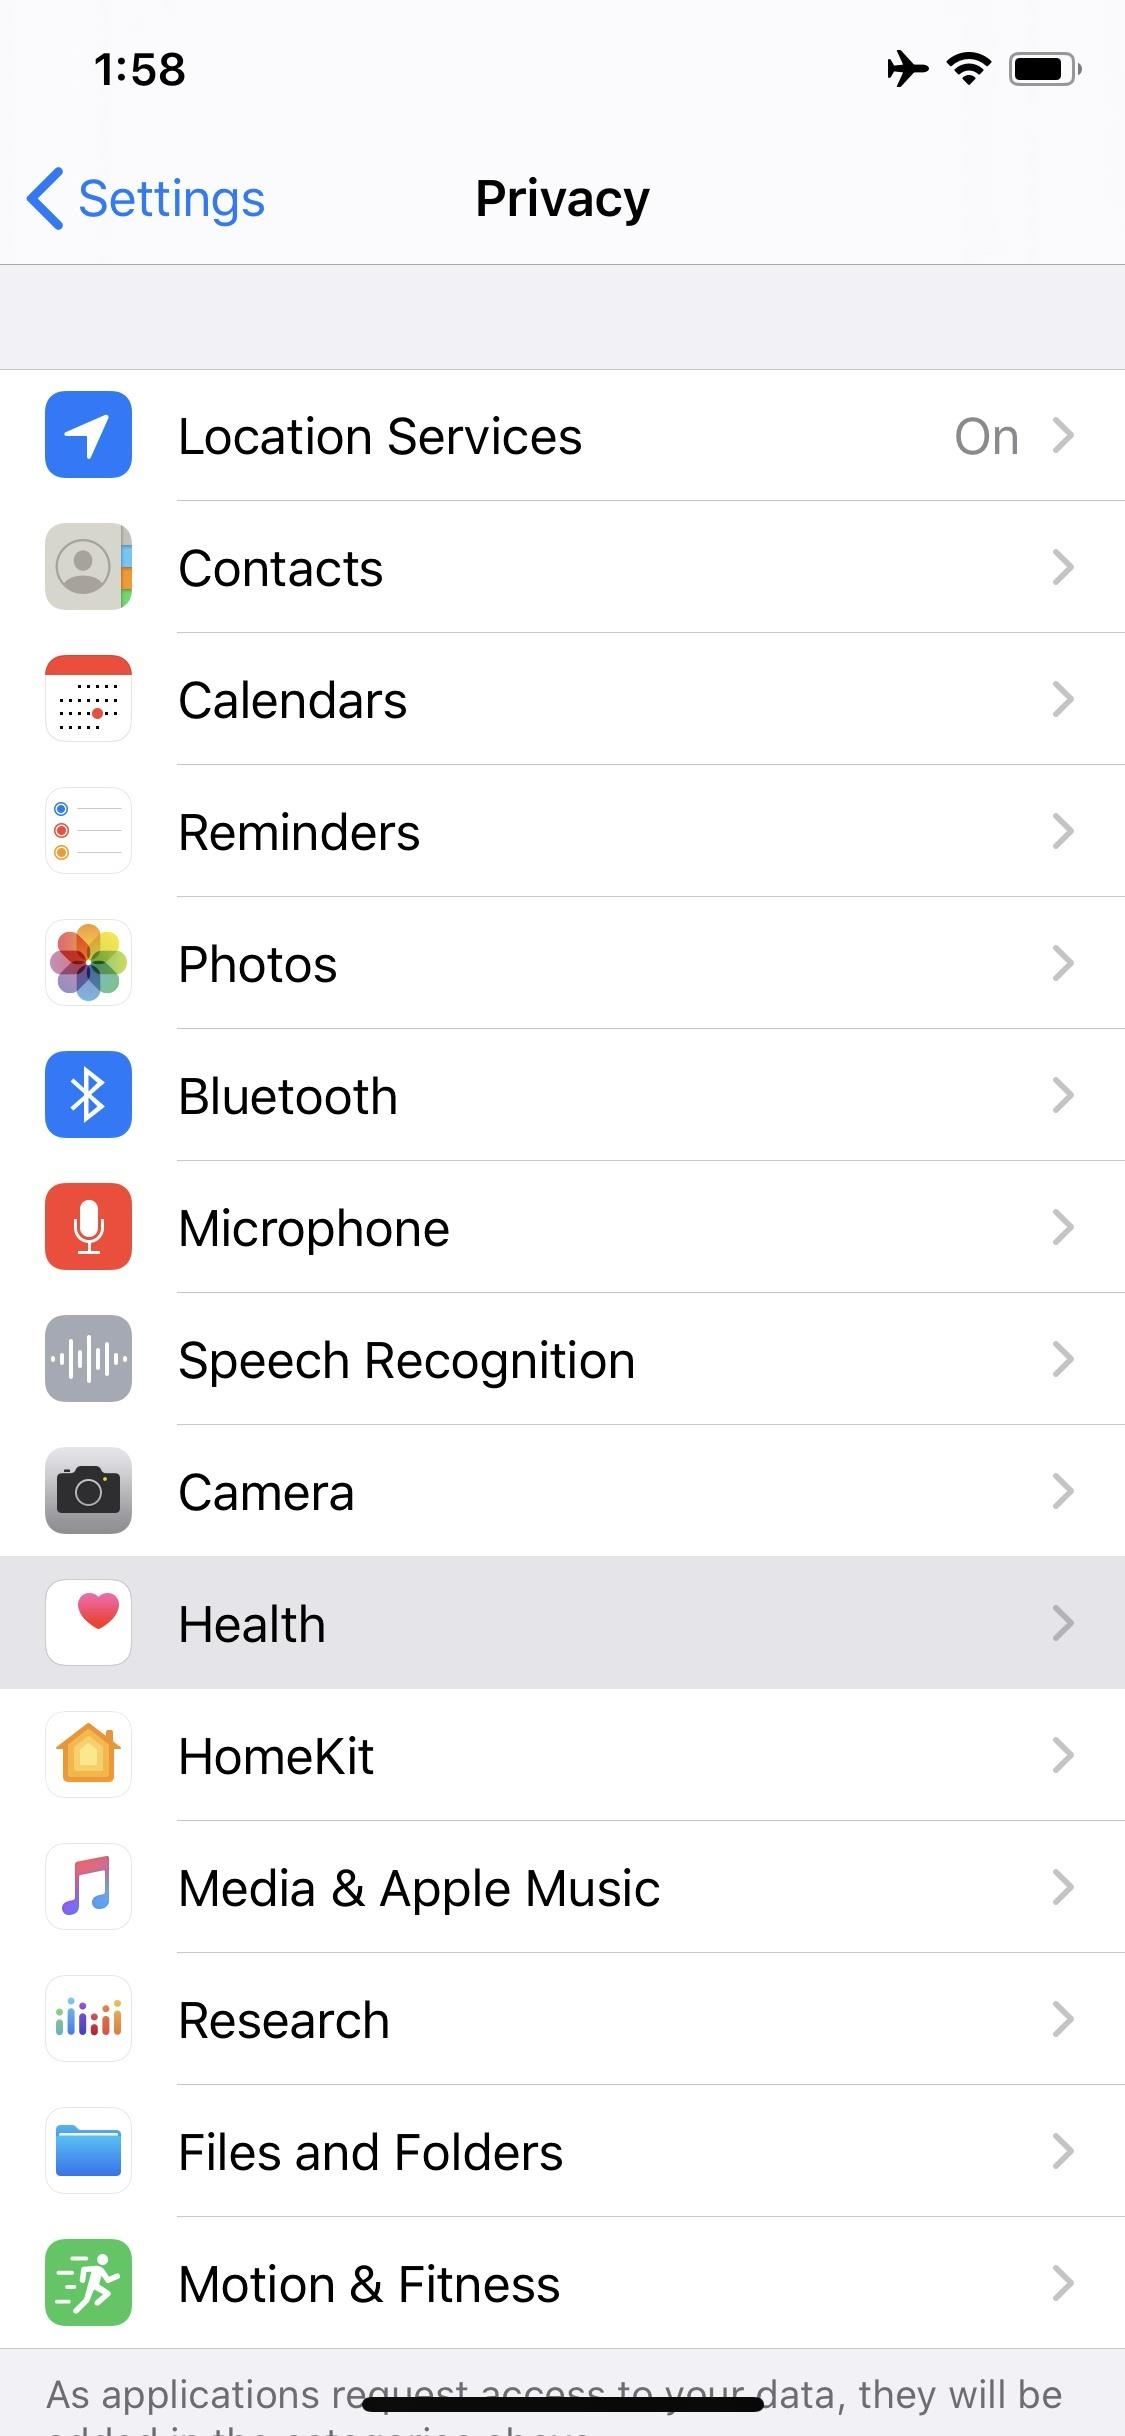 Apple Just Released iOS 13.5 Public Beta 2 for iPhone, Includes COVID-19 Exposure Notification API